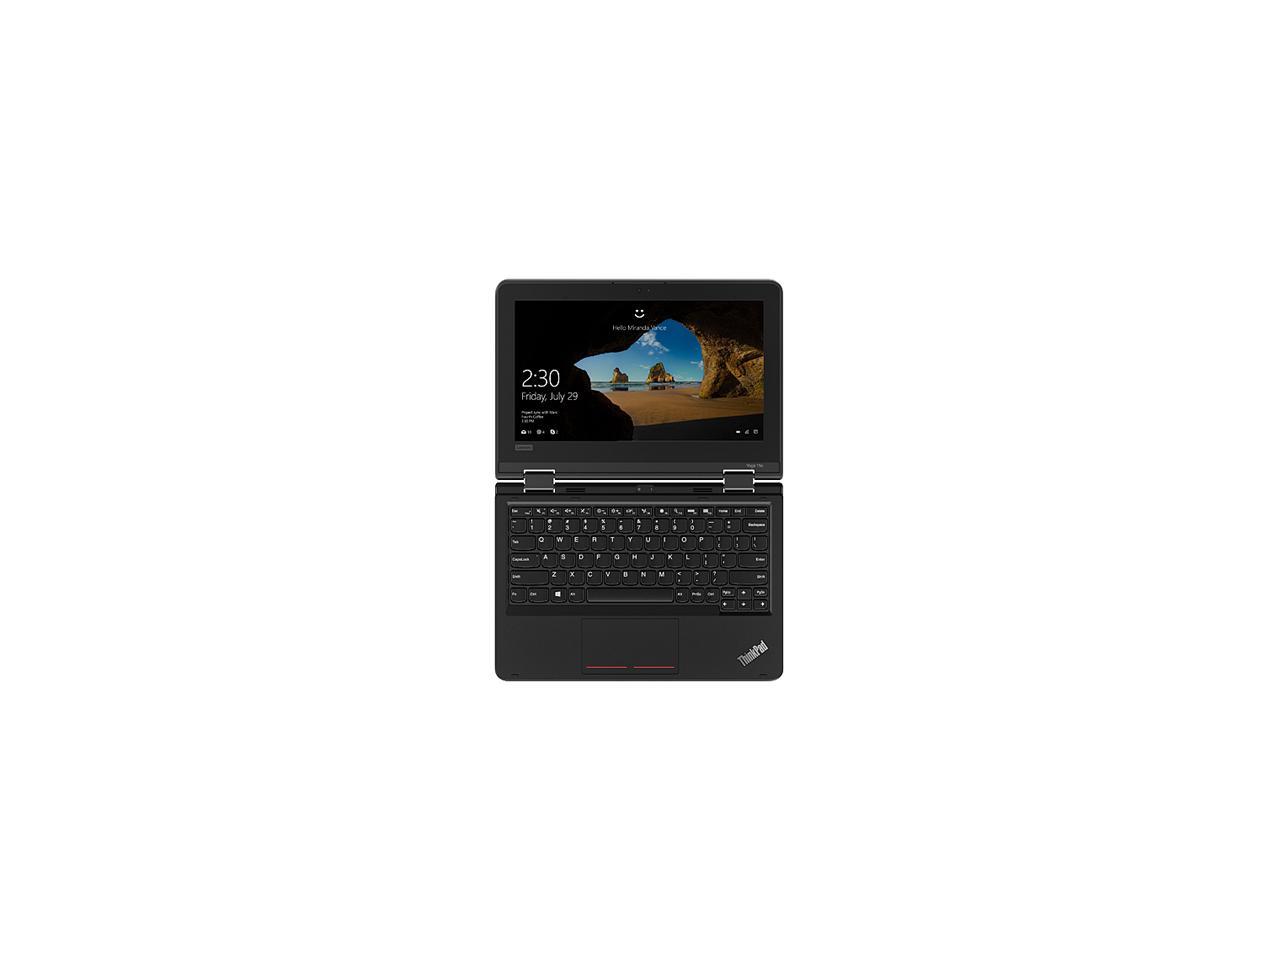 Lenovo ThinkPad 11e 5th Gen Yoga 20LMS00000 Intel Celeron N4100 (1.10 GHz) 4 GB Memory 128 GB PCIe SSD Intel UHD Graphics 600 11.6" Touchscreen 1366 x 768 Convertible 2-in-1 Laptop Windows 10 Pro National Academic Standard